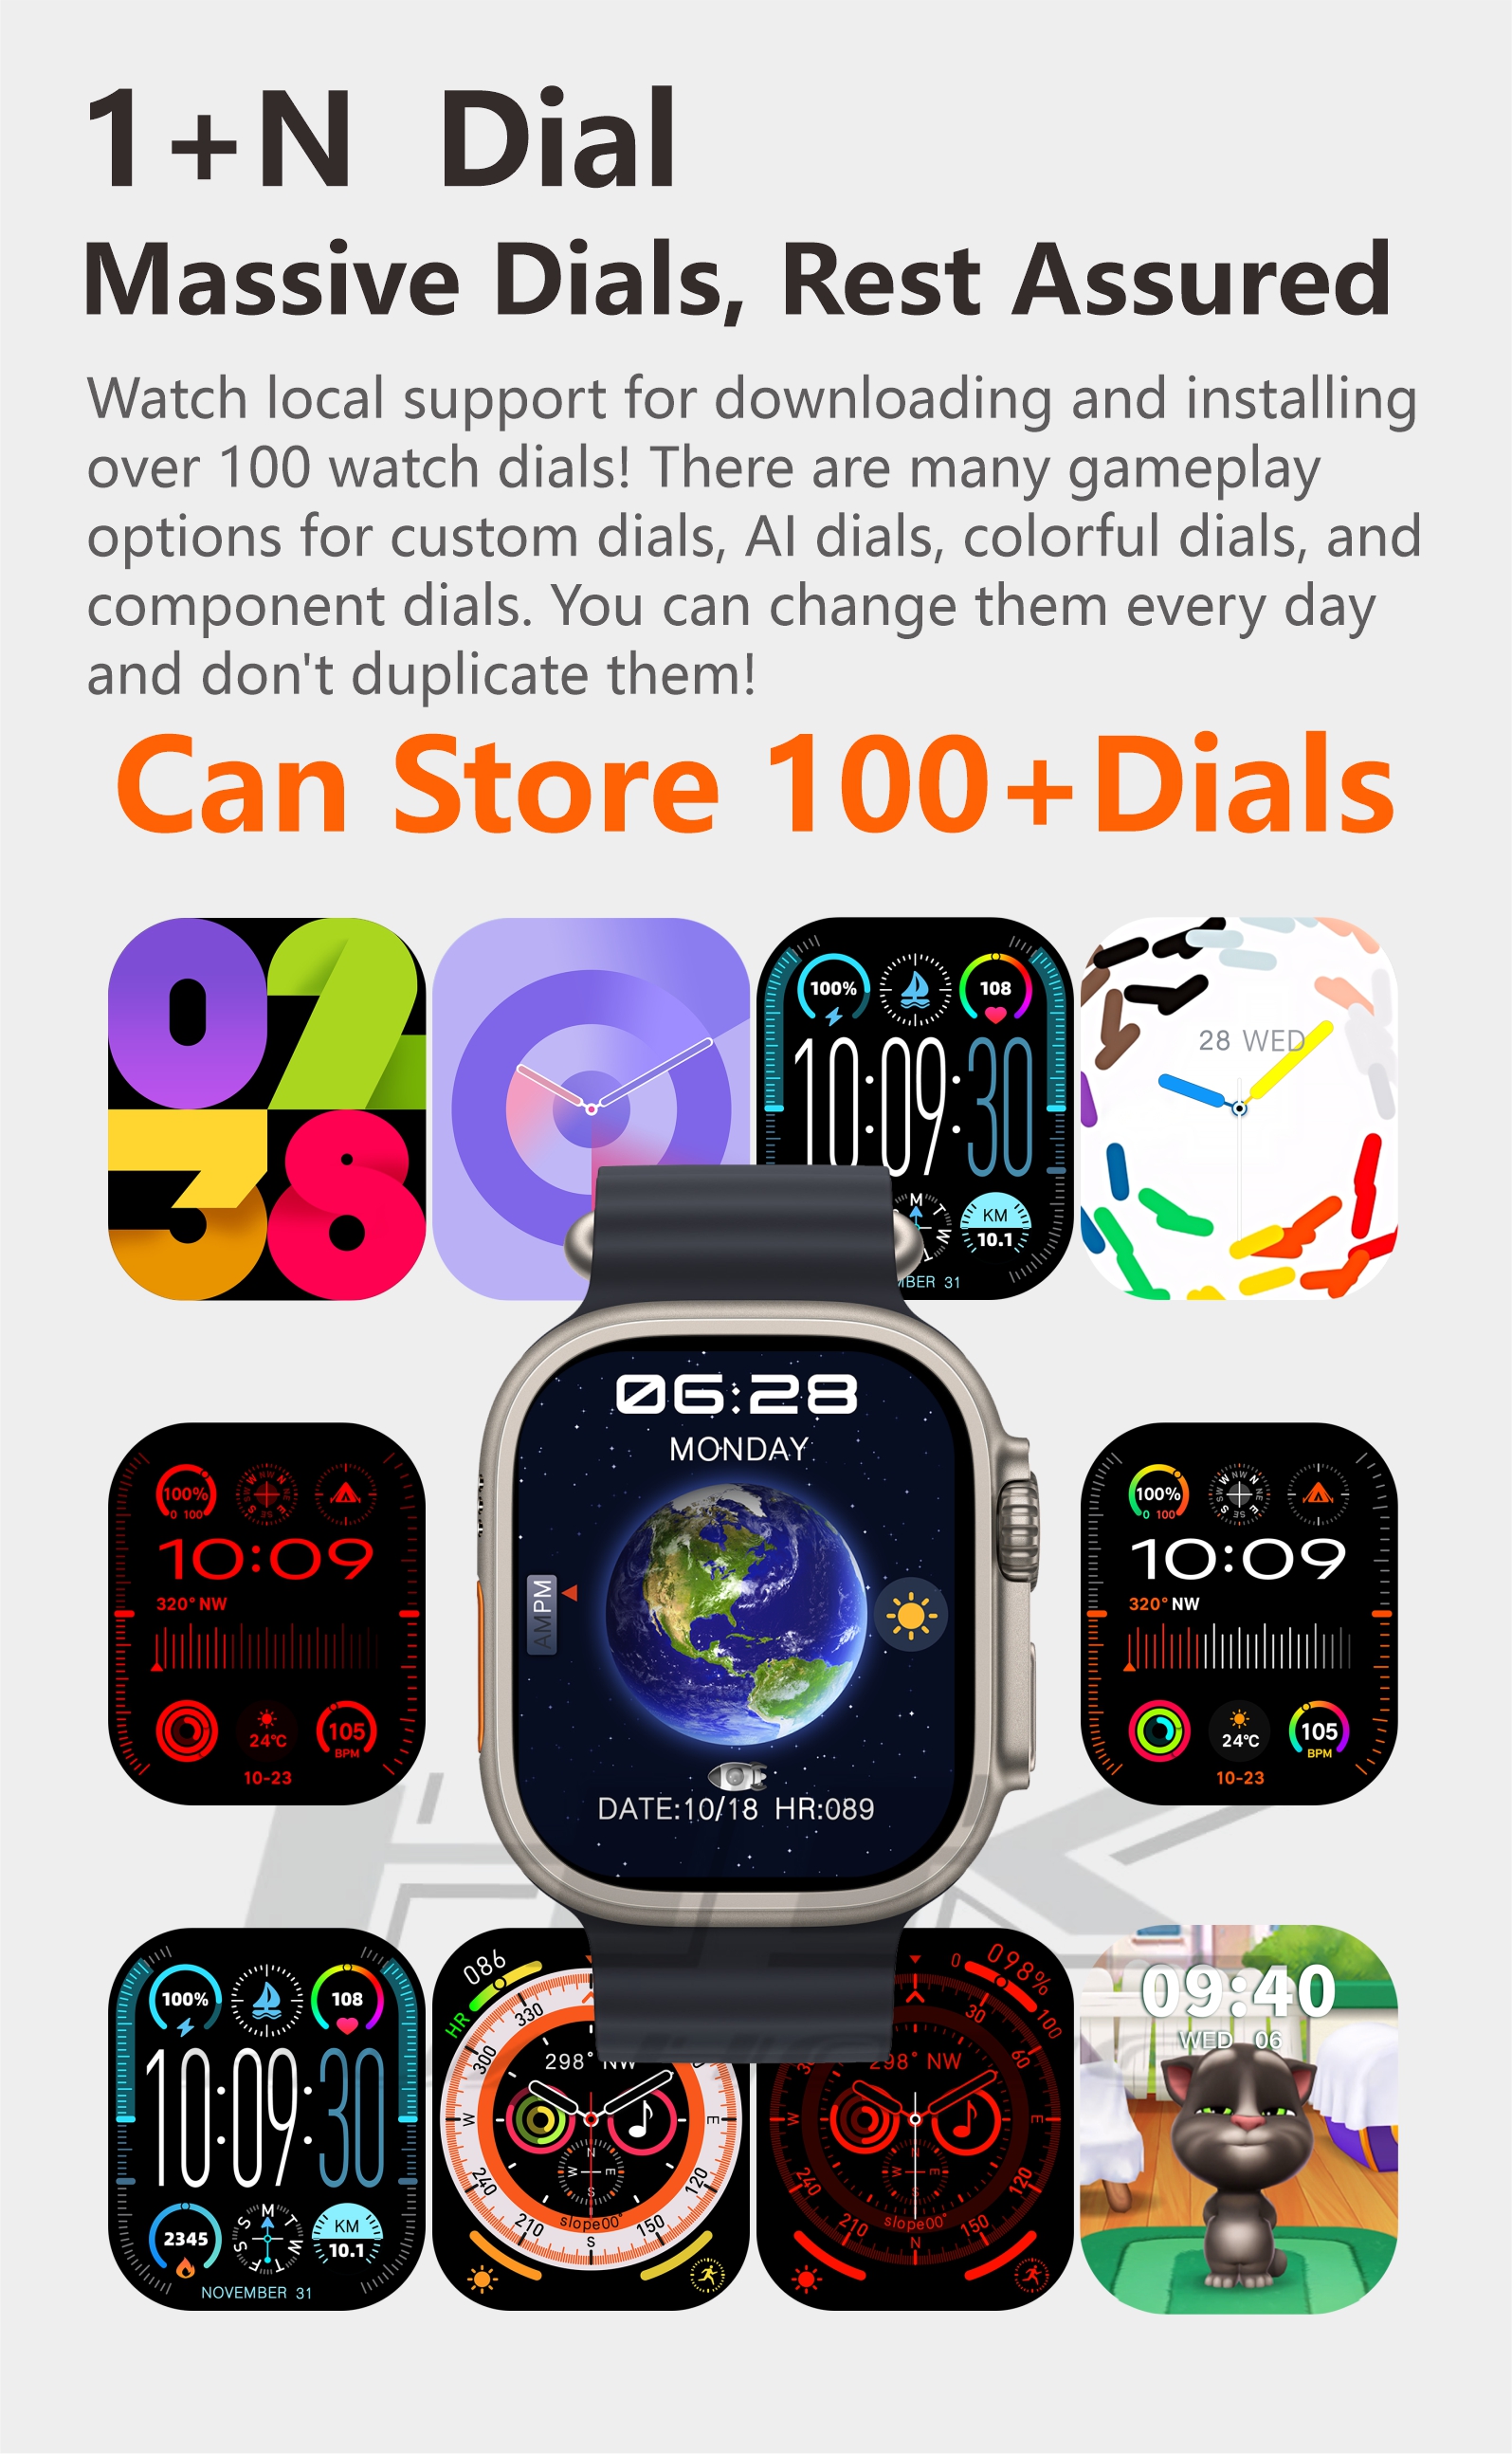 2023 HK9 Ultra 2 AMOLED Smart Watch Men HK8 Upgraded ChatGPT NFC Bluetooth  Call Smartwatch 2GB ROM Dynamic Island Ai Watch Face